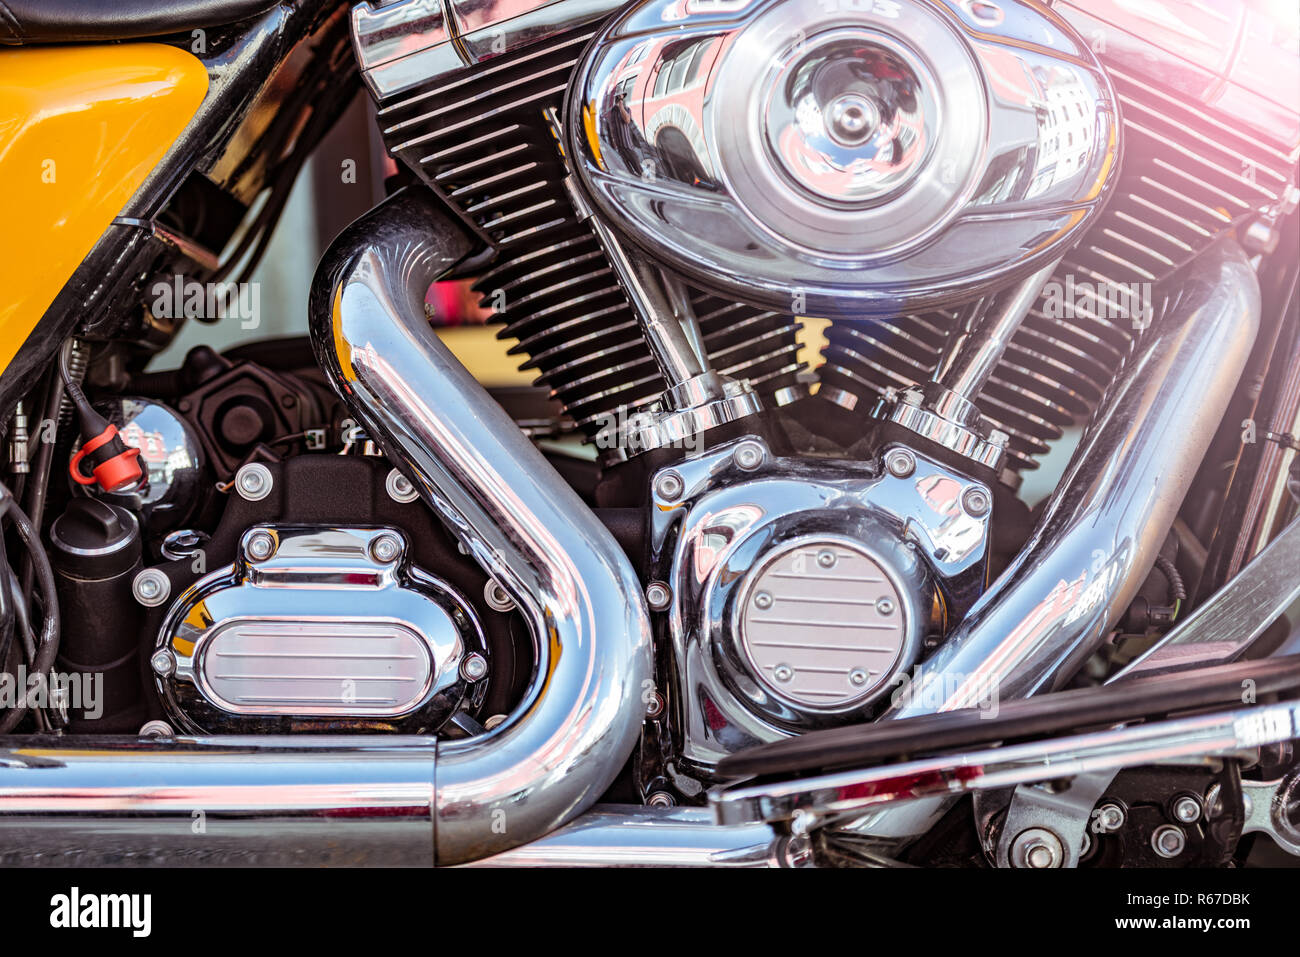 Vista detalle de motor de motocicleta Foto de stock